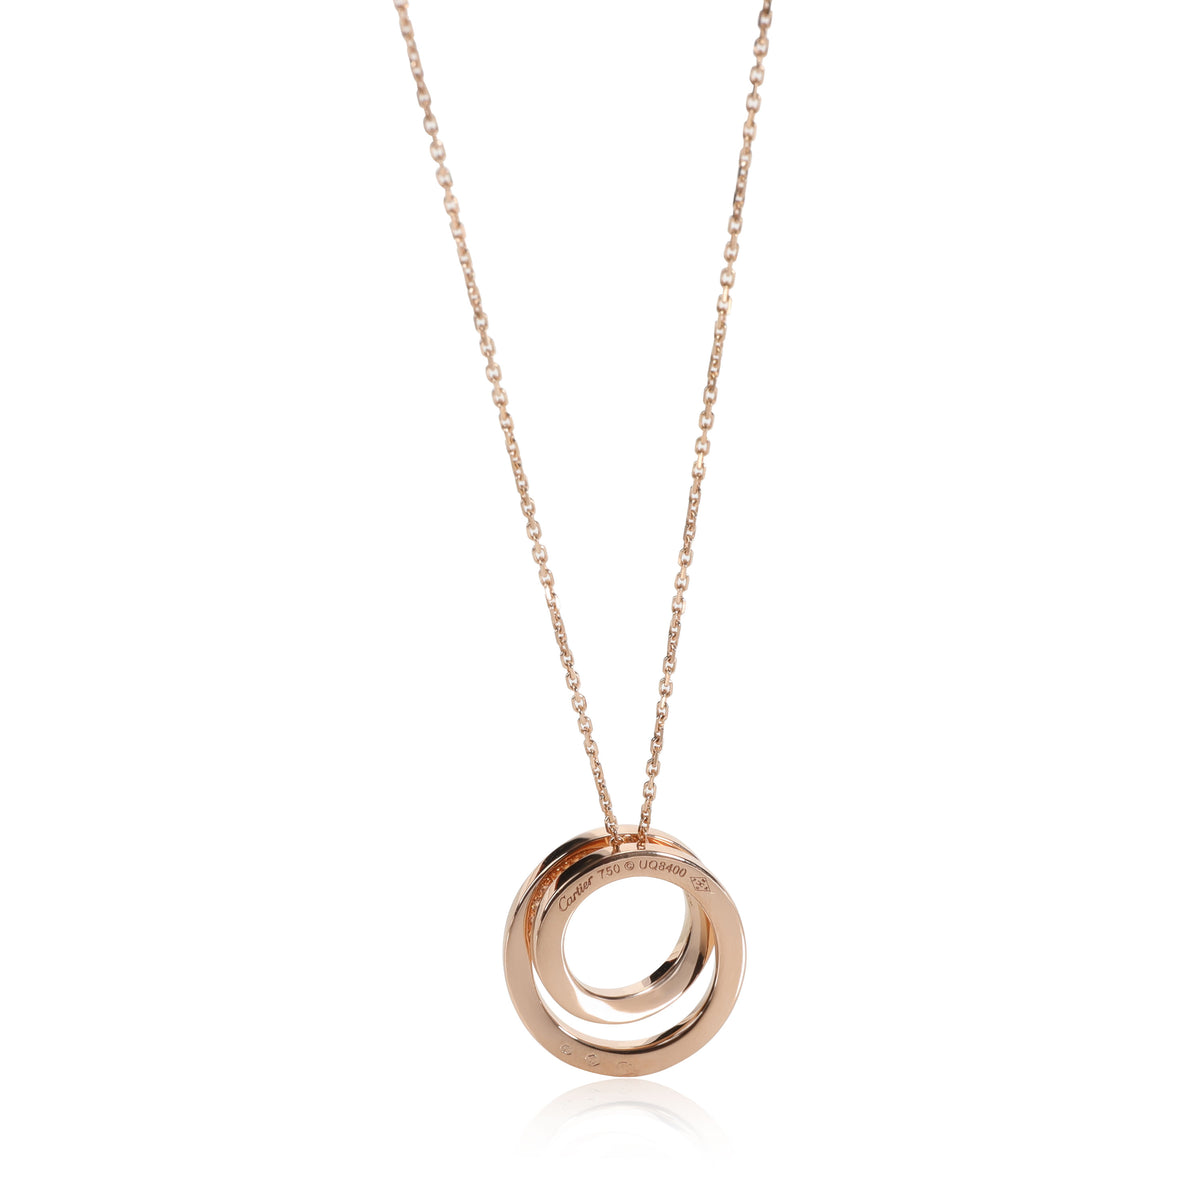 Cartier Etincelle Diamond Necklace in 18K Pink Gold 0.14 CTW